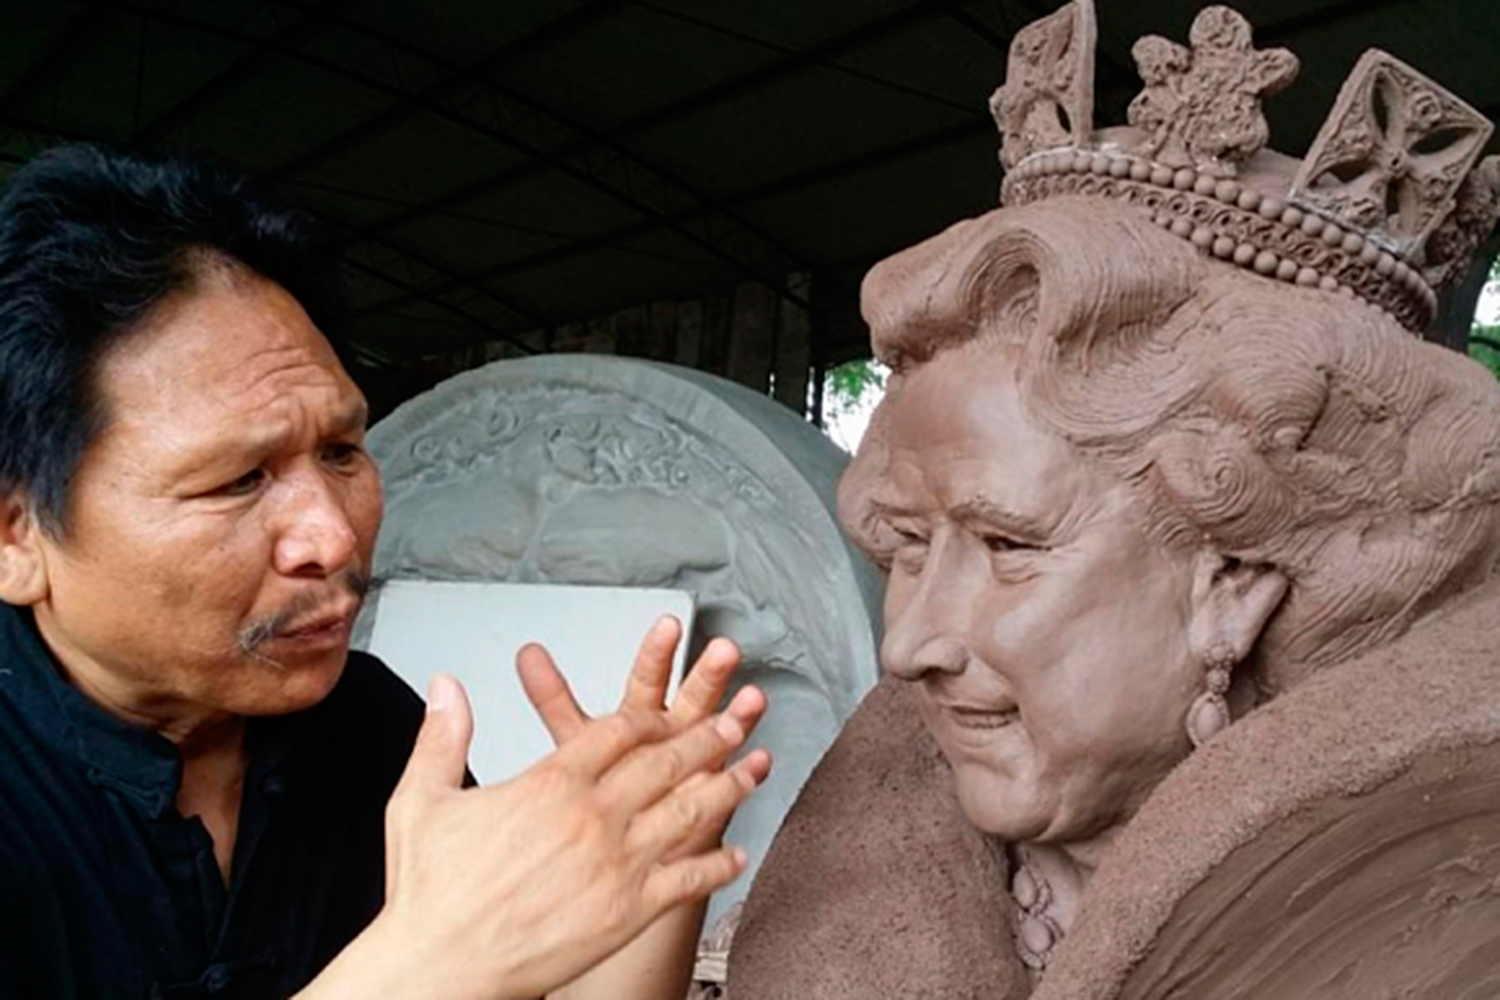 The new Queen Elizabeth II bust that resembles Tom Hanks